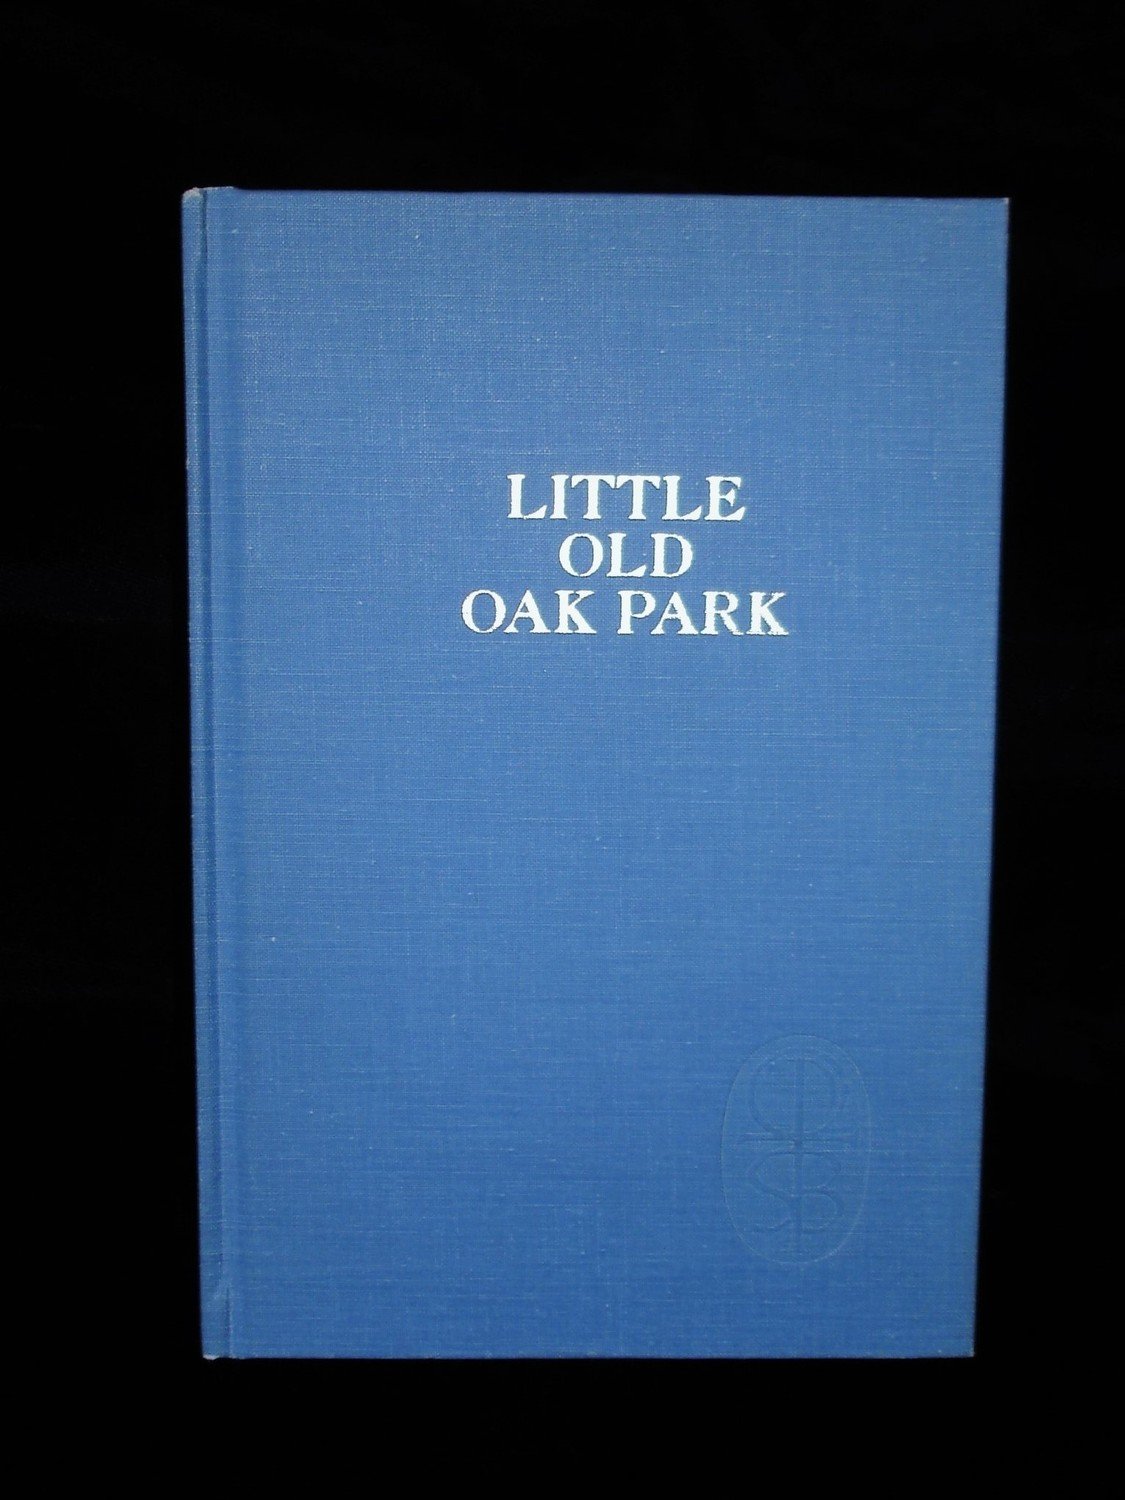 Little Old Oak Park